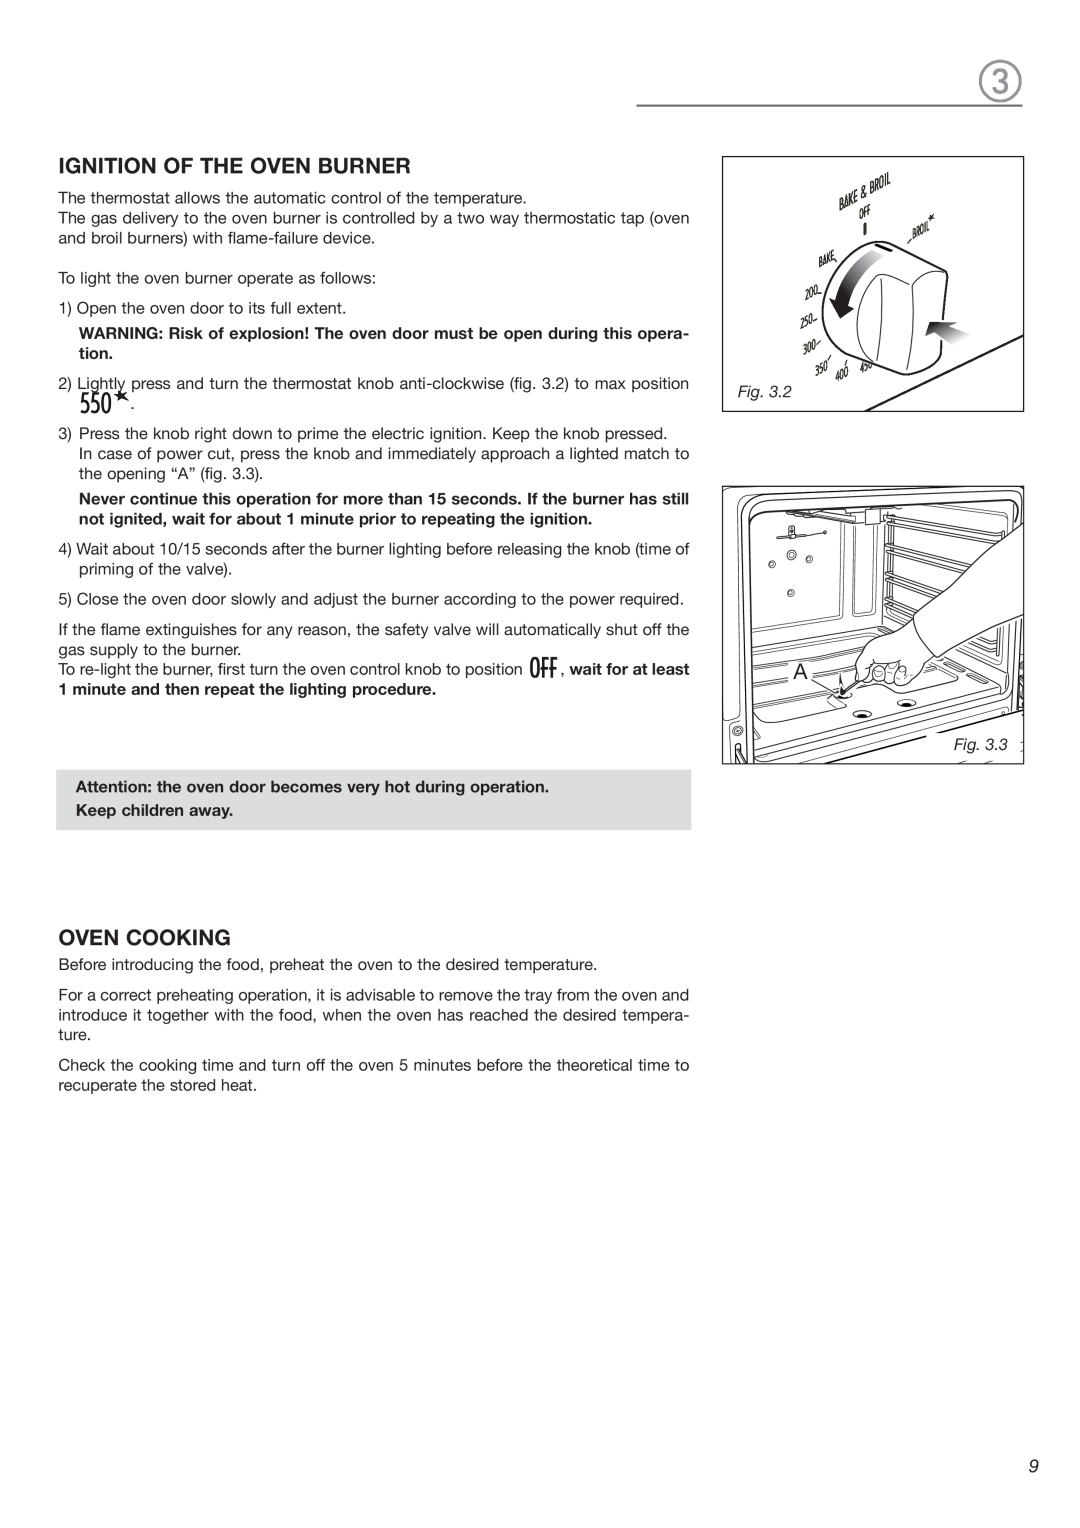 DeLonghi DEBIG 24 SS warranty Ignition Of The Oven Burner, Oven Cooking 